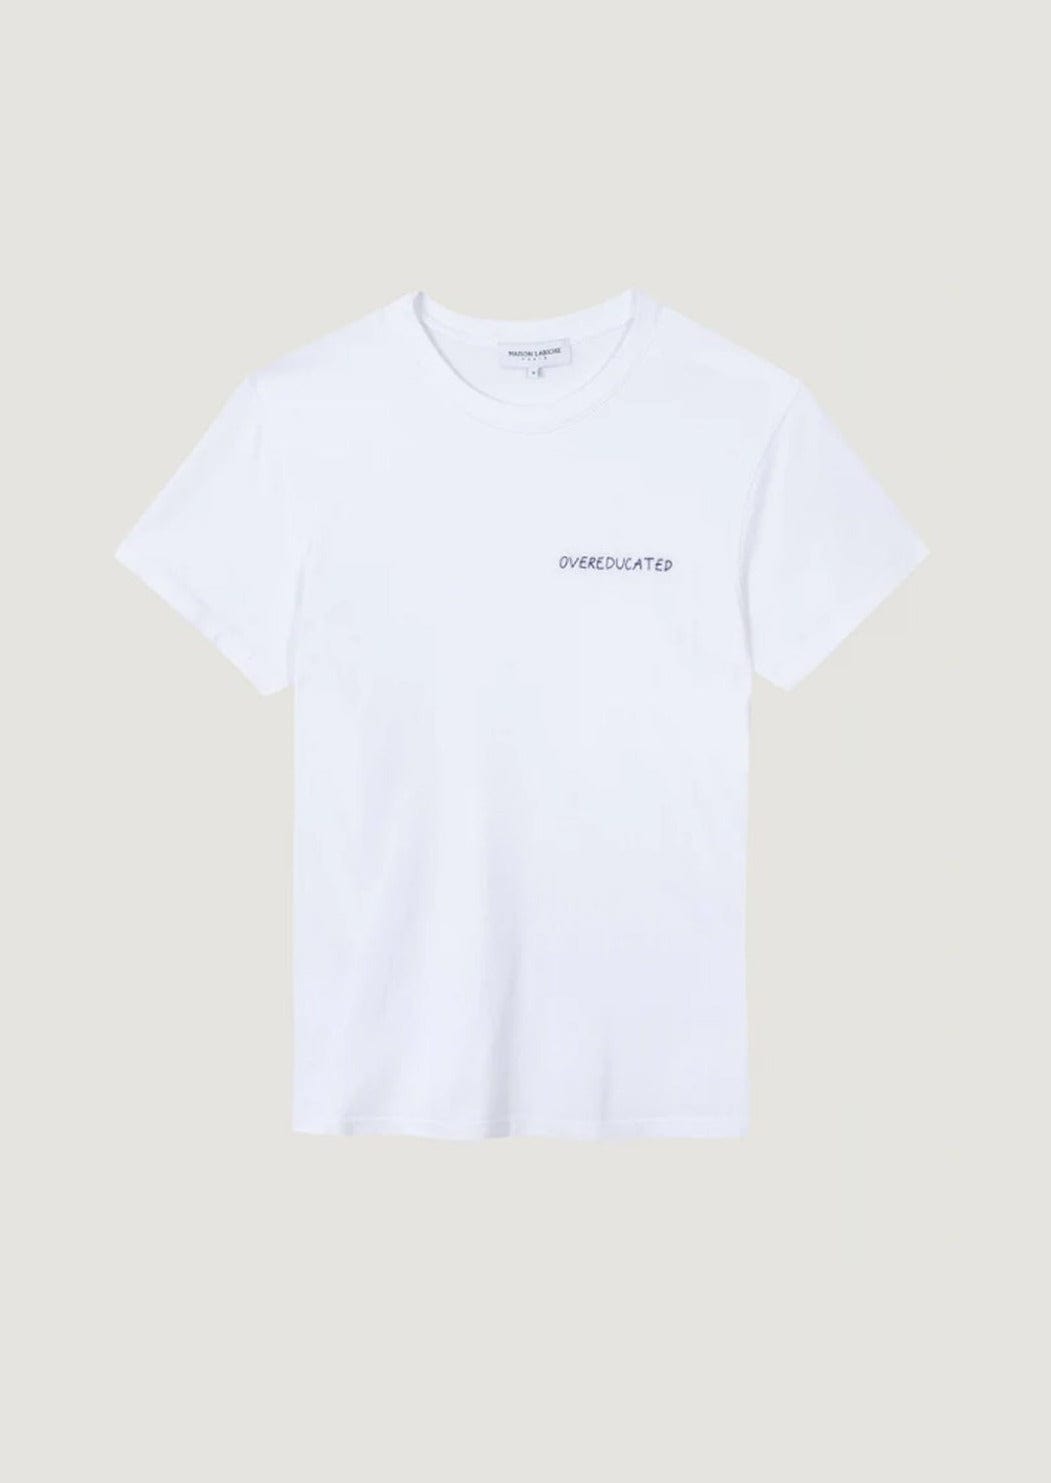 MAISON LABICHE Polo/T-shirt White / S T-shirt Maison Labiche - Popincourt